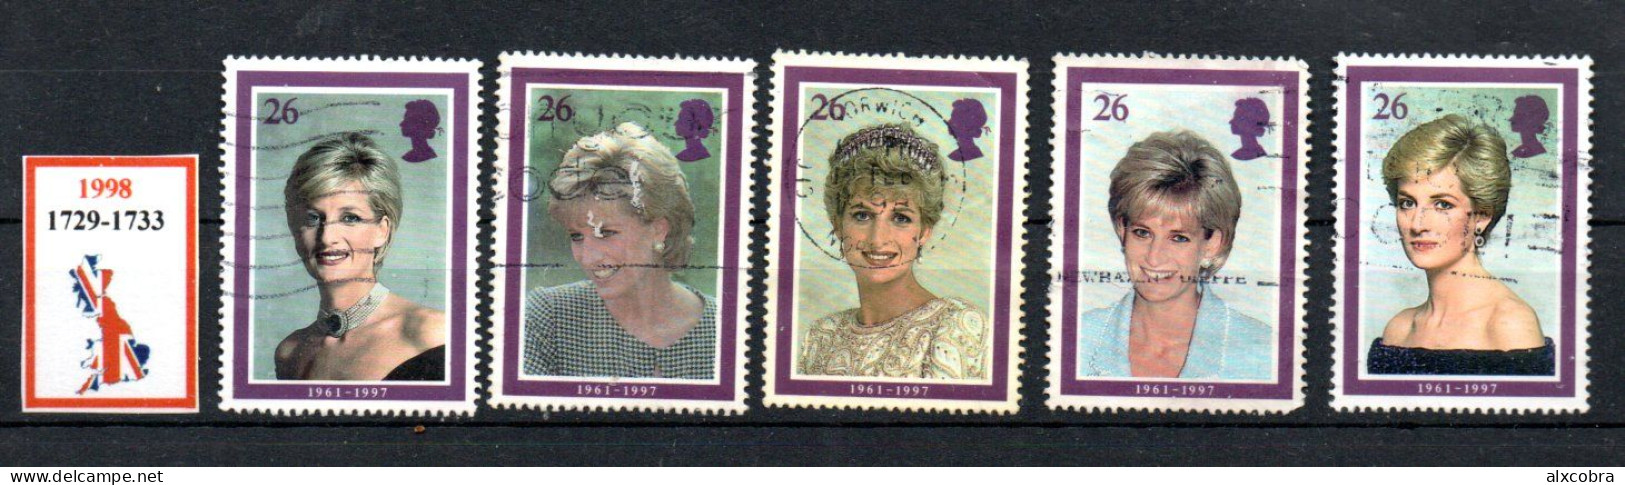 United Kingdom Lady Diana 1998 Michel 1729-1733 USED - Gebruikt